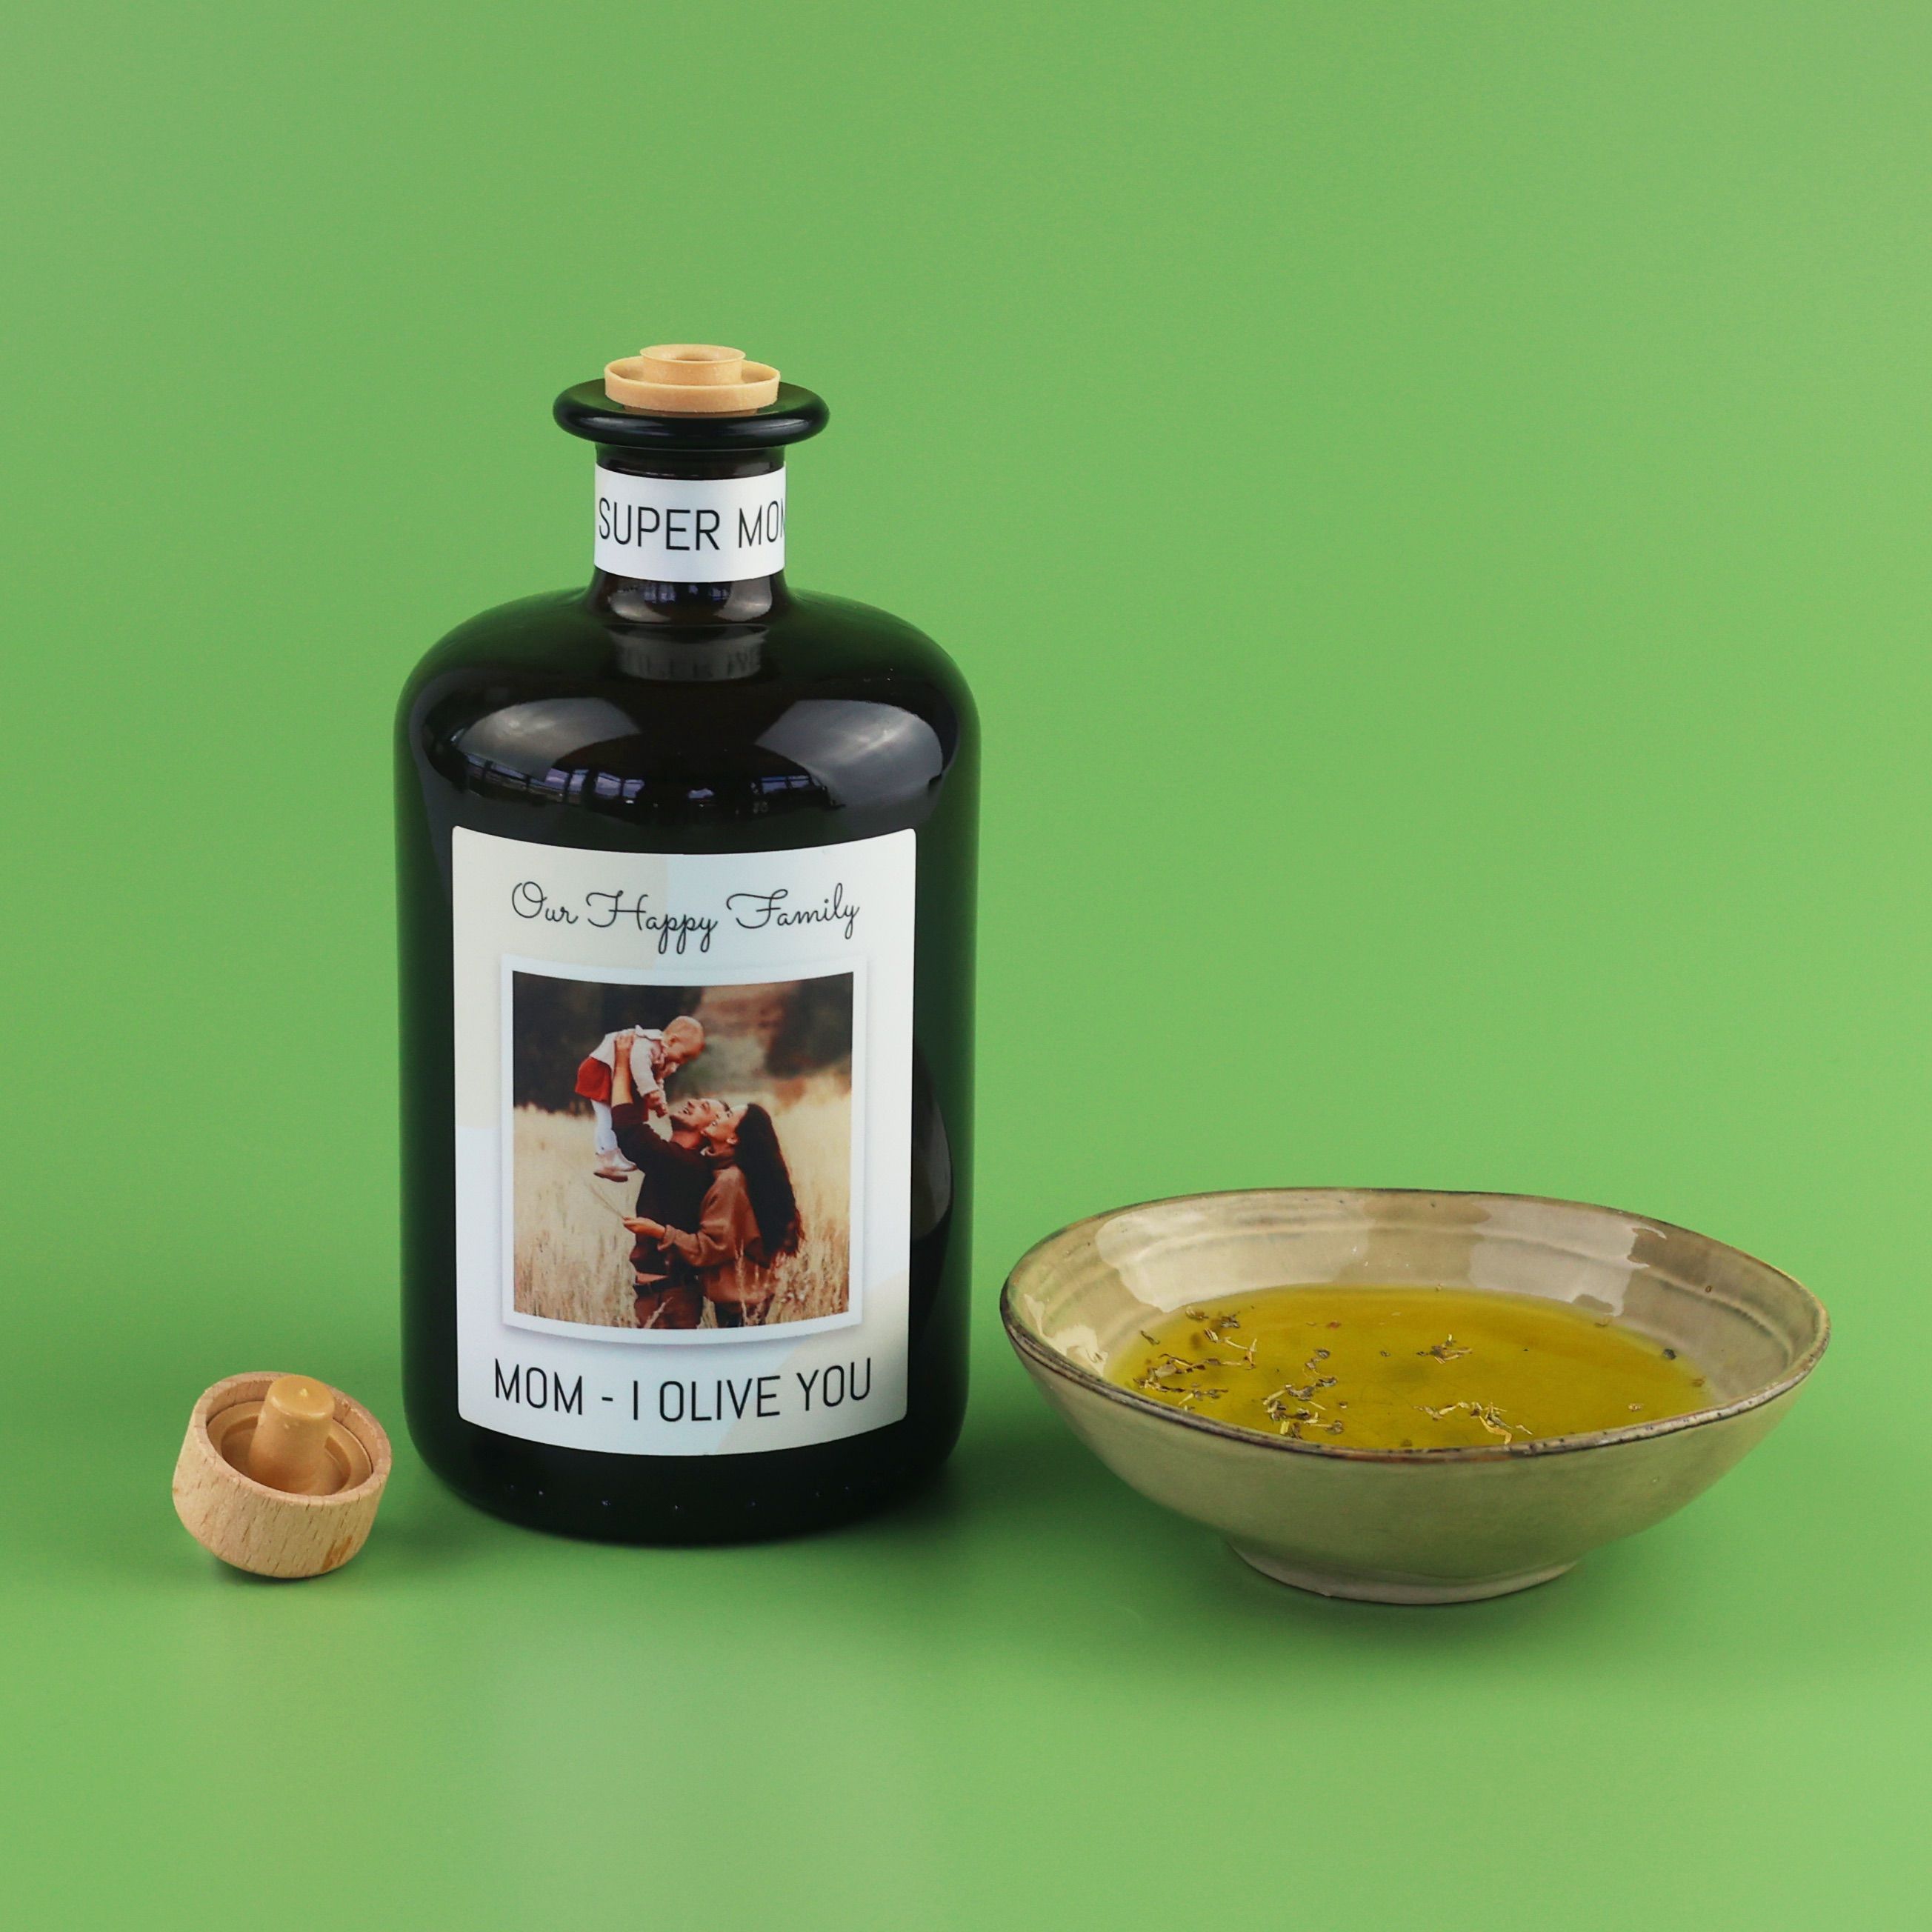 olive oil 3